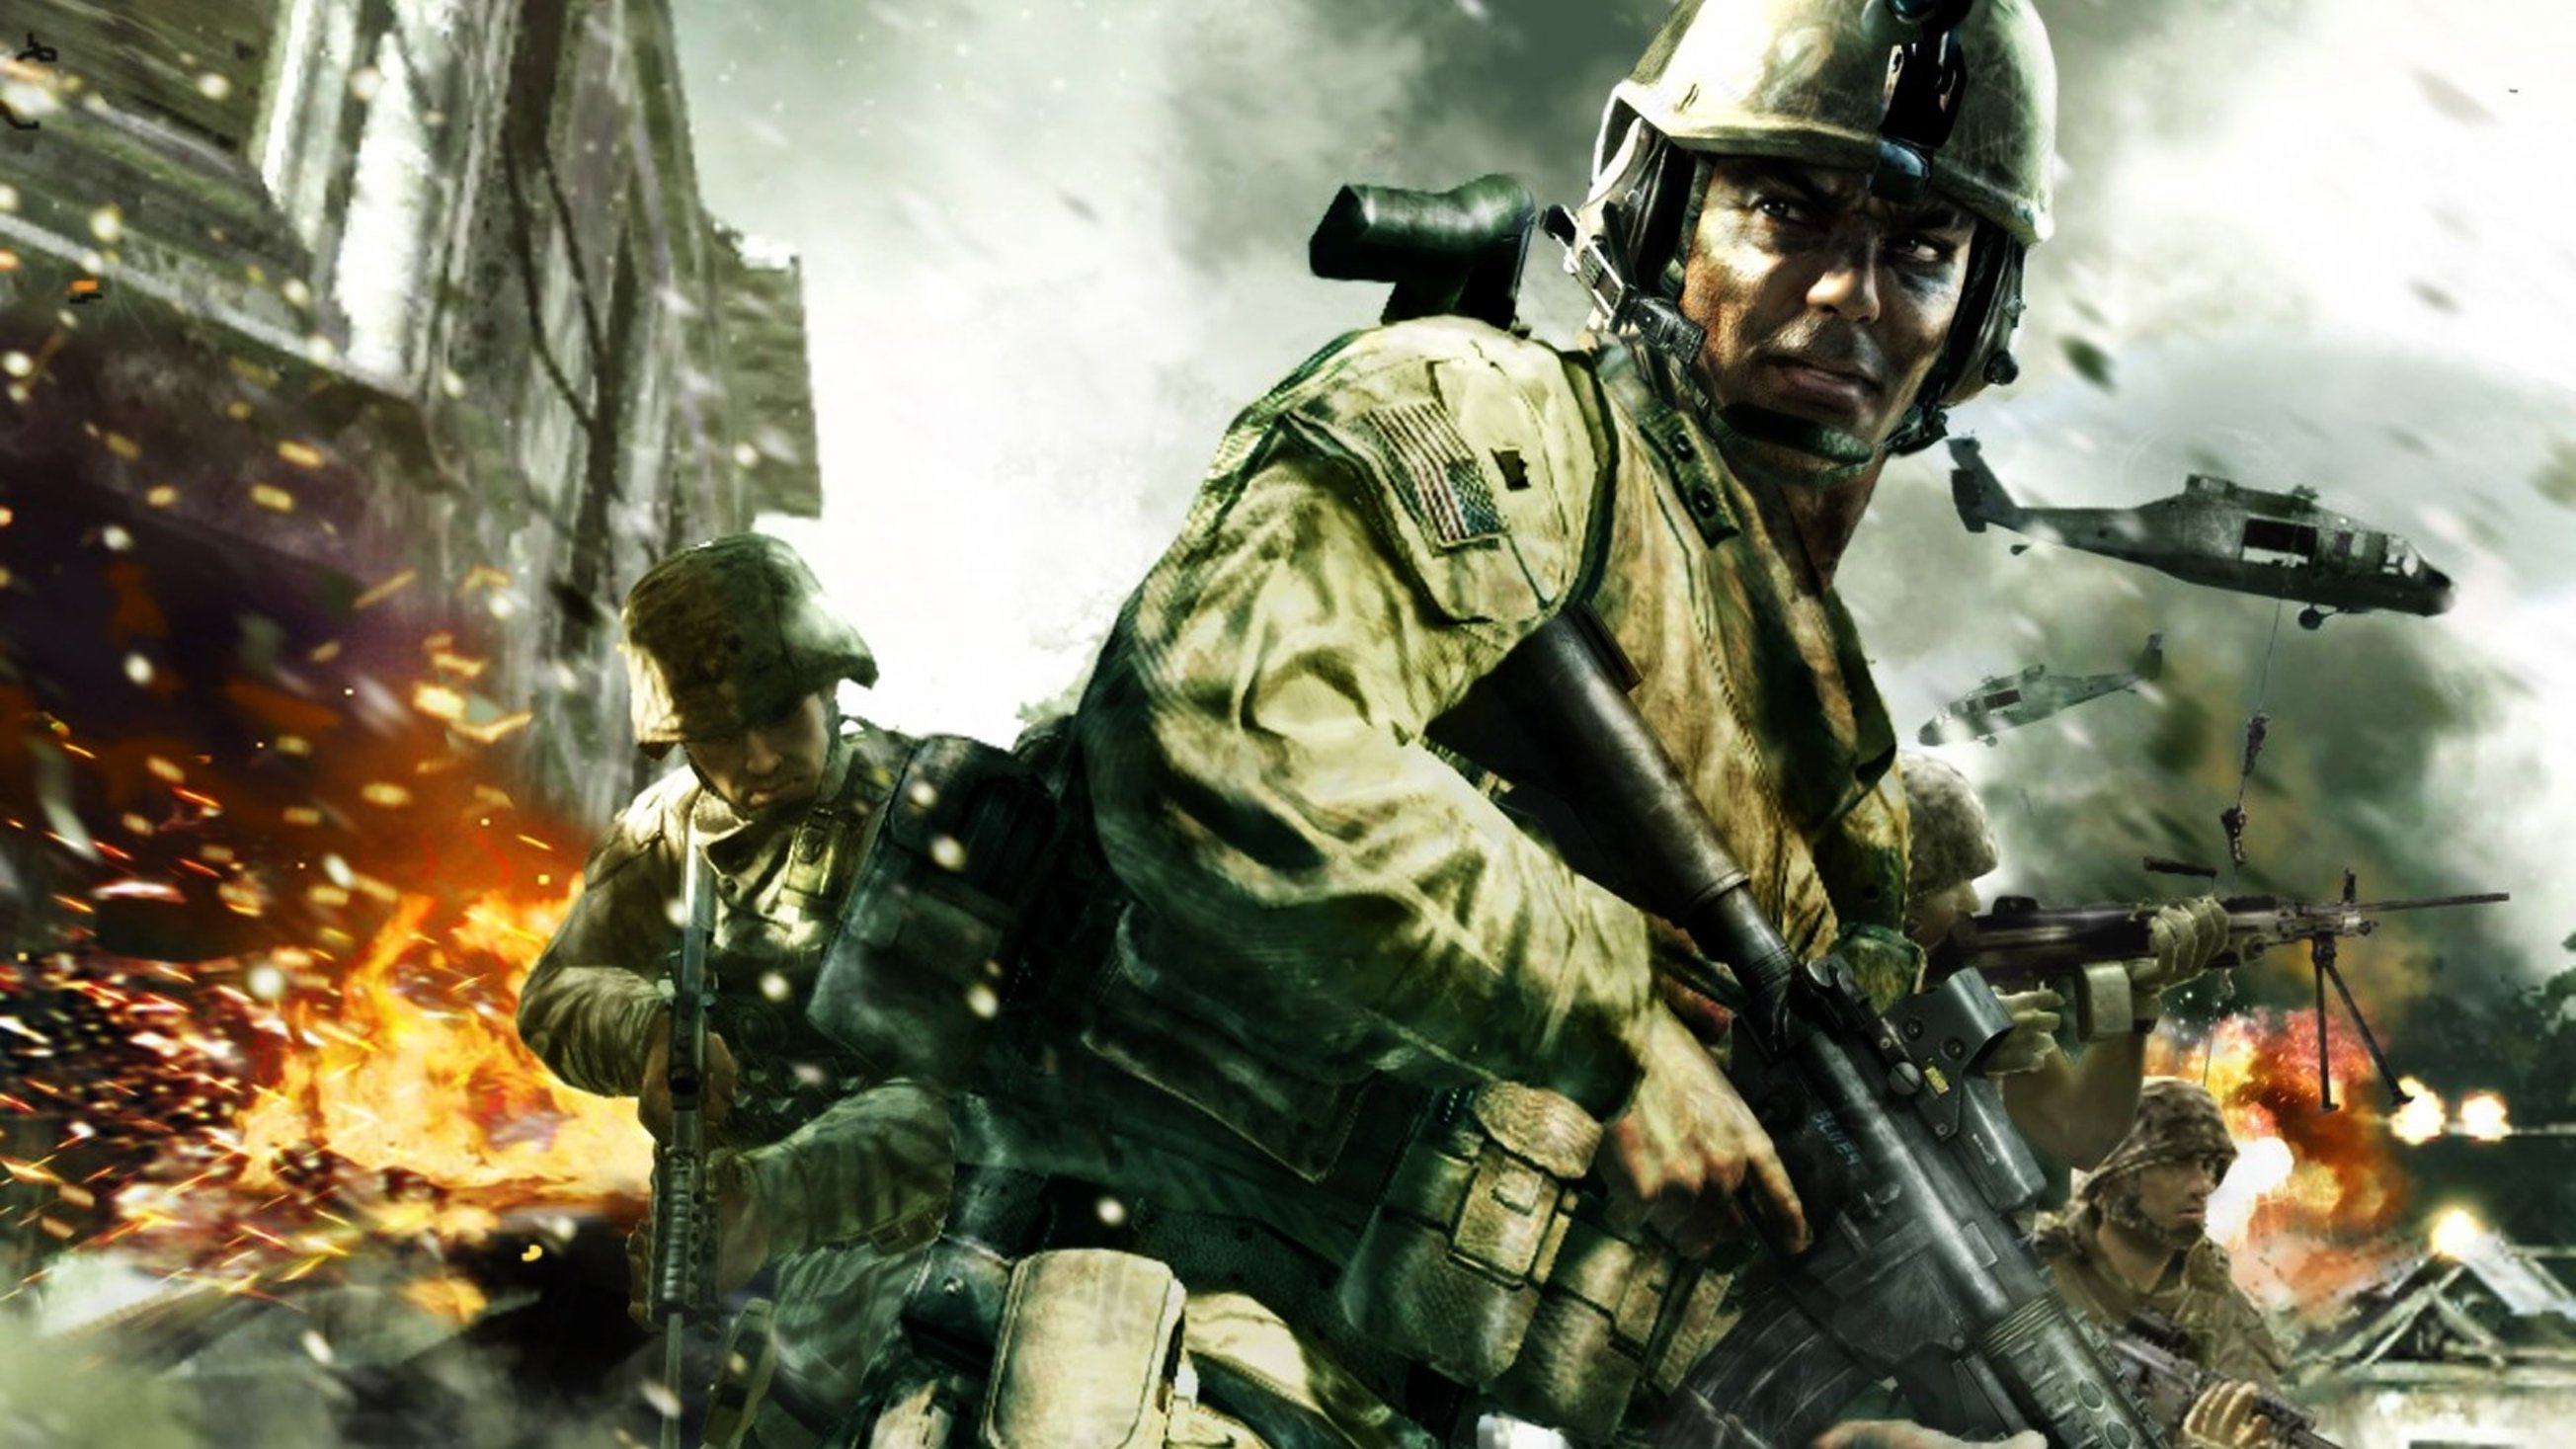 Call of duty награды. Call of Duty 4 Modern Warfare. СФД ща вген ьщвук цфкафку 4. Call of Duty - часть 4 - Modern Warfare. Кал оф дьюти Modern Warfare.